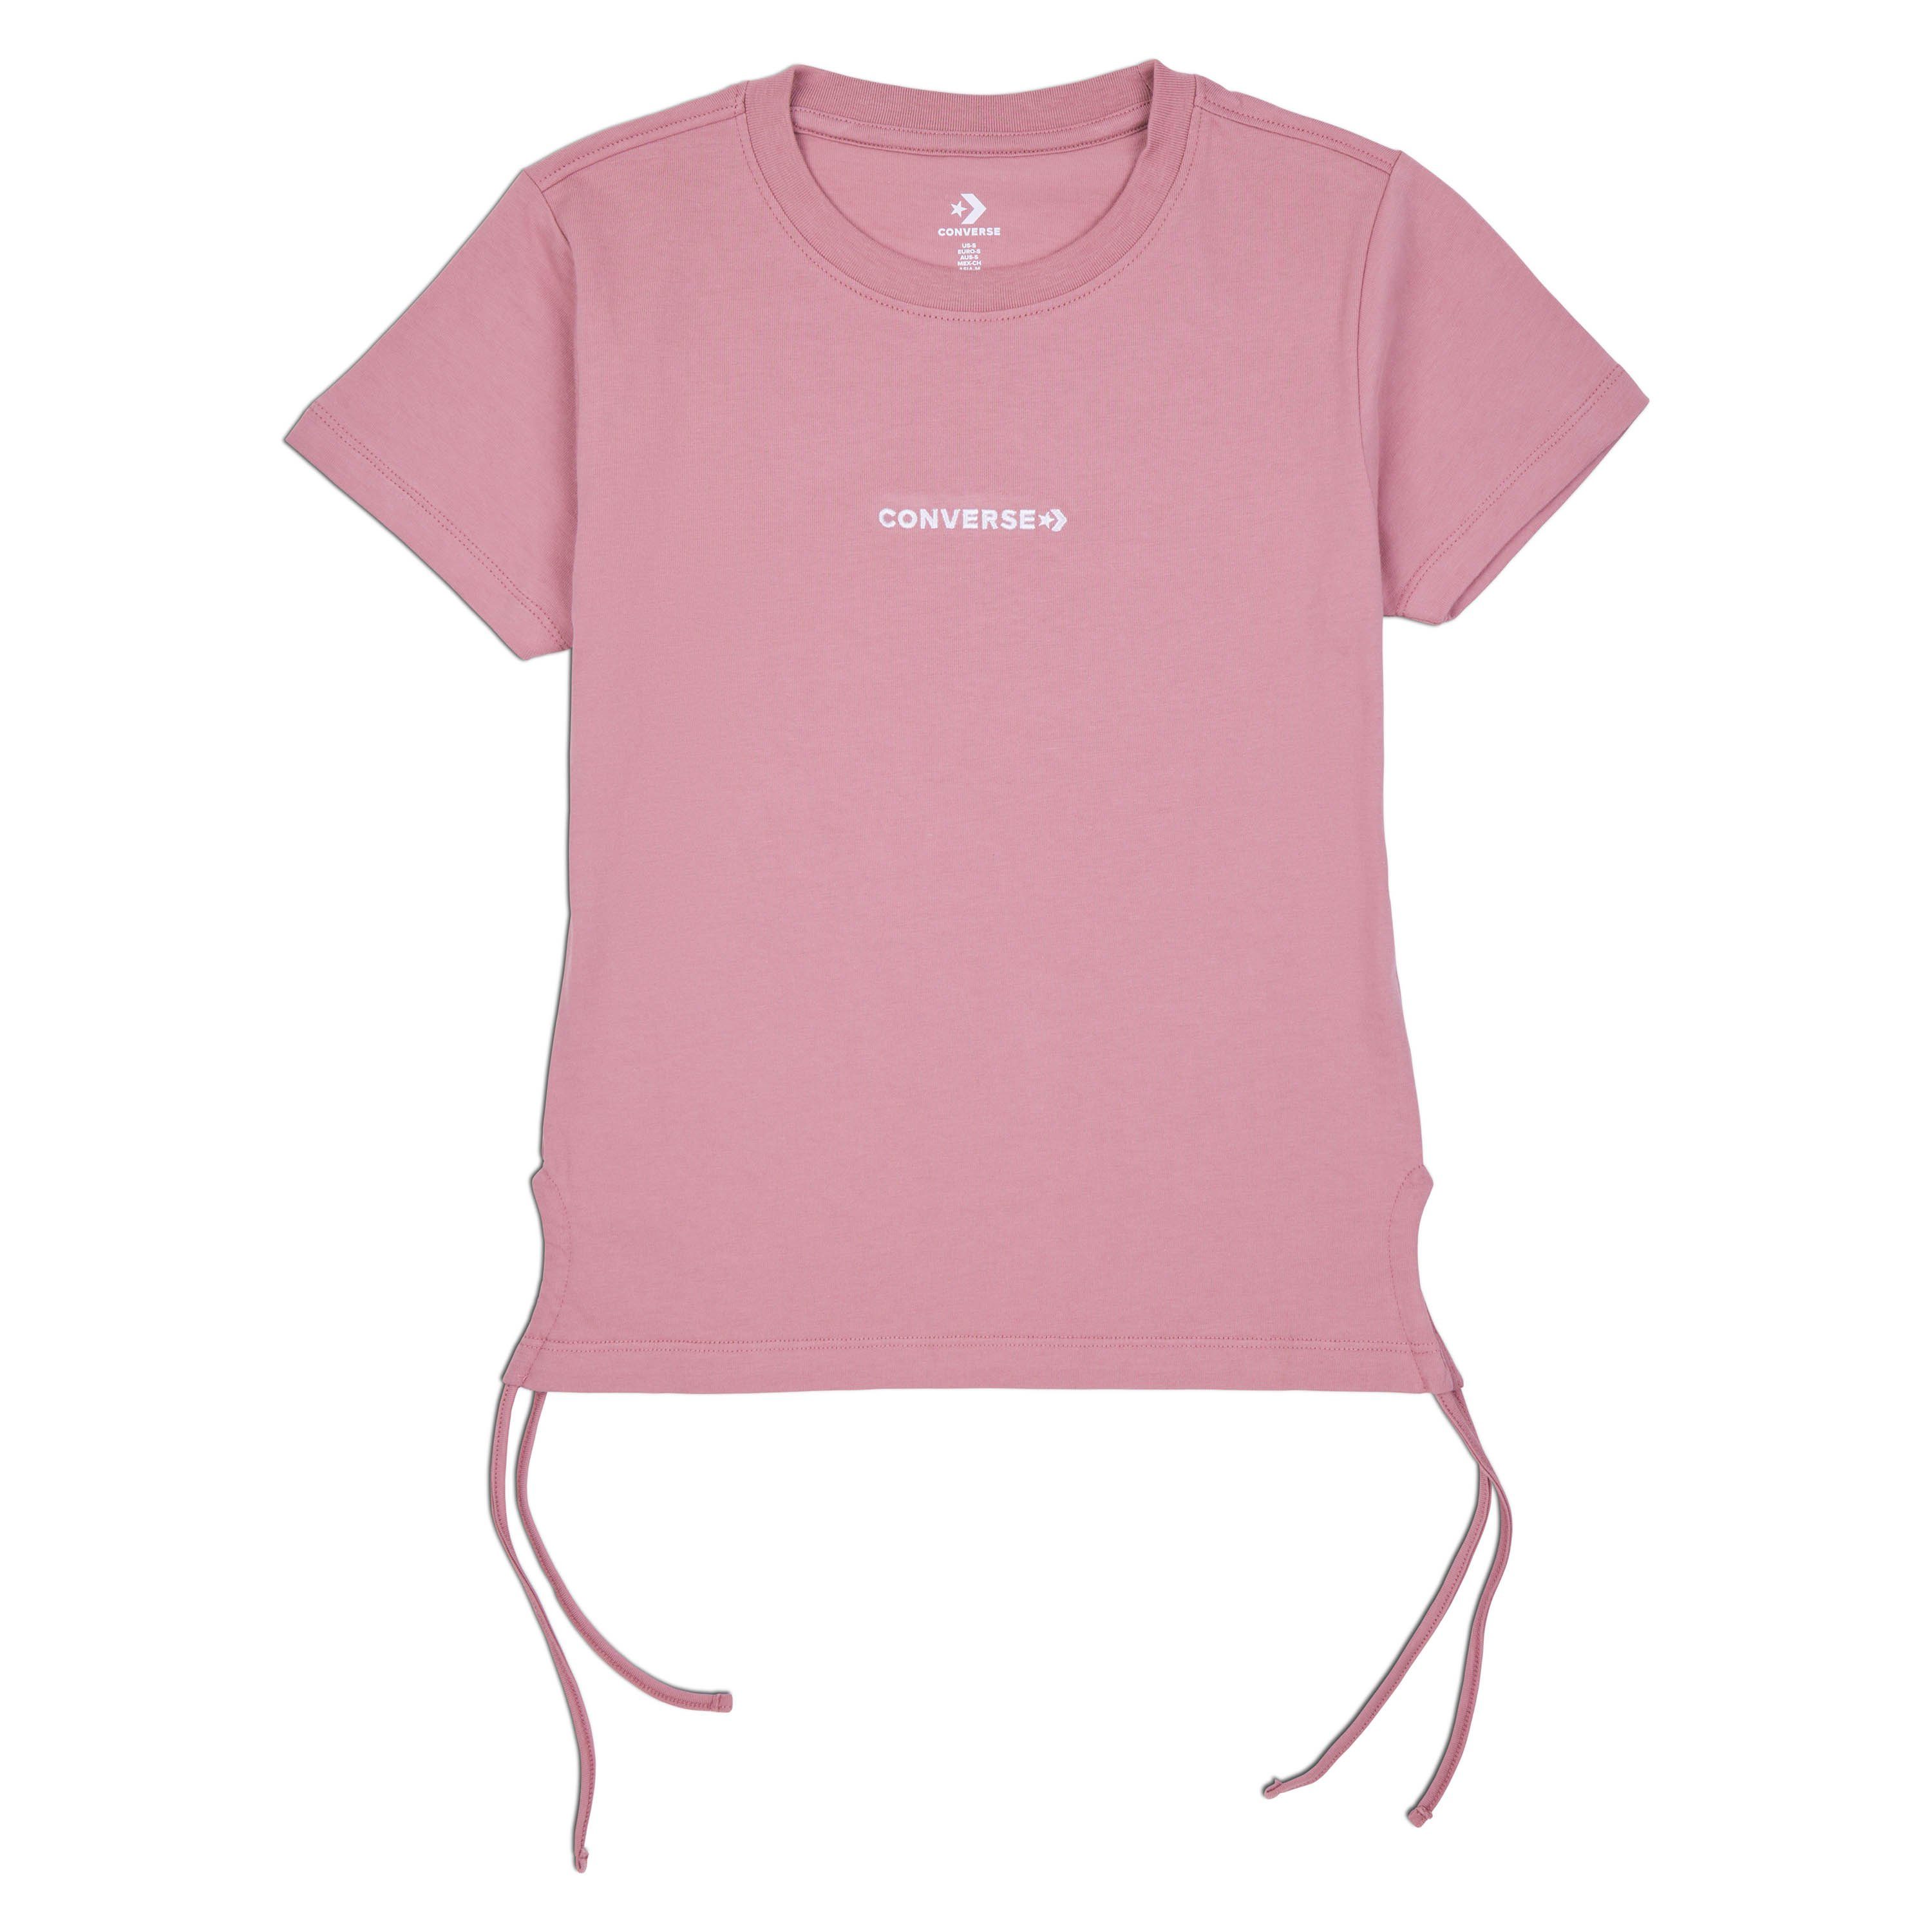 Converse T-Shirt WORDMARK FASHION NOVELTY night TOP flamingo